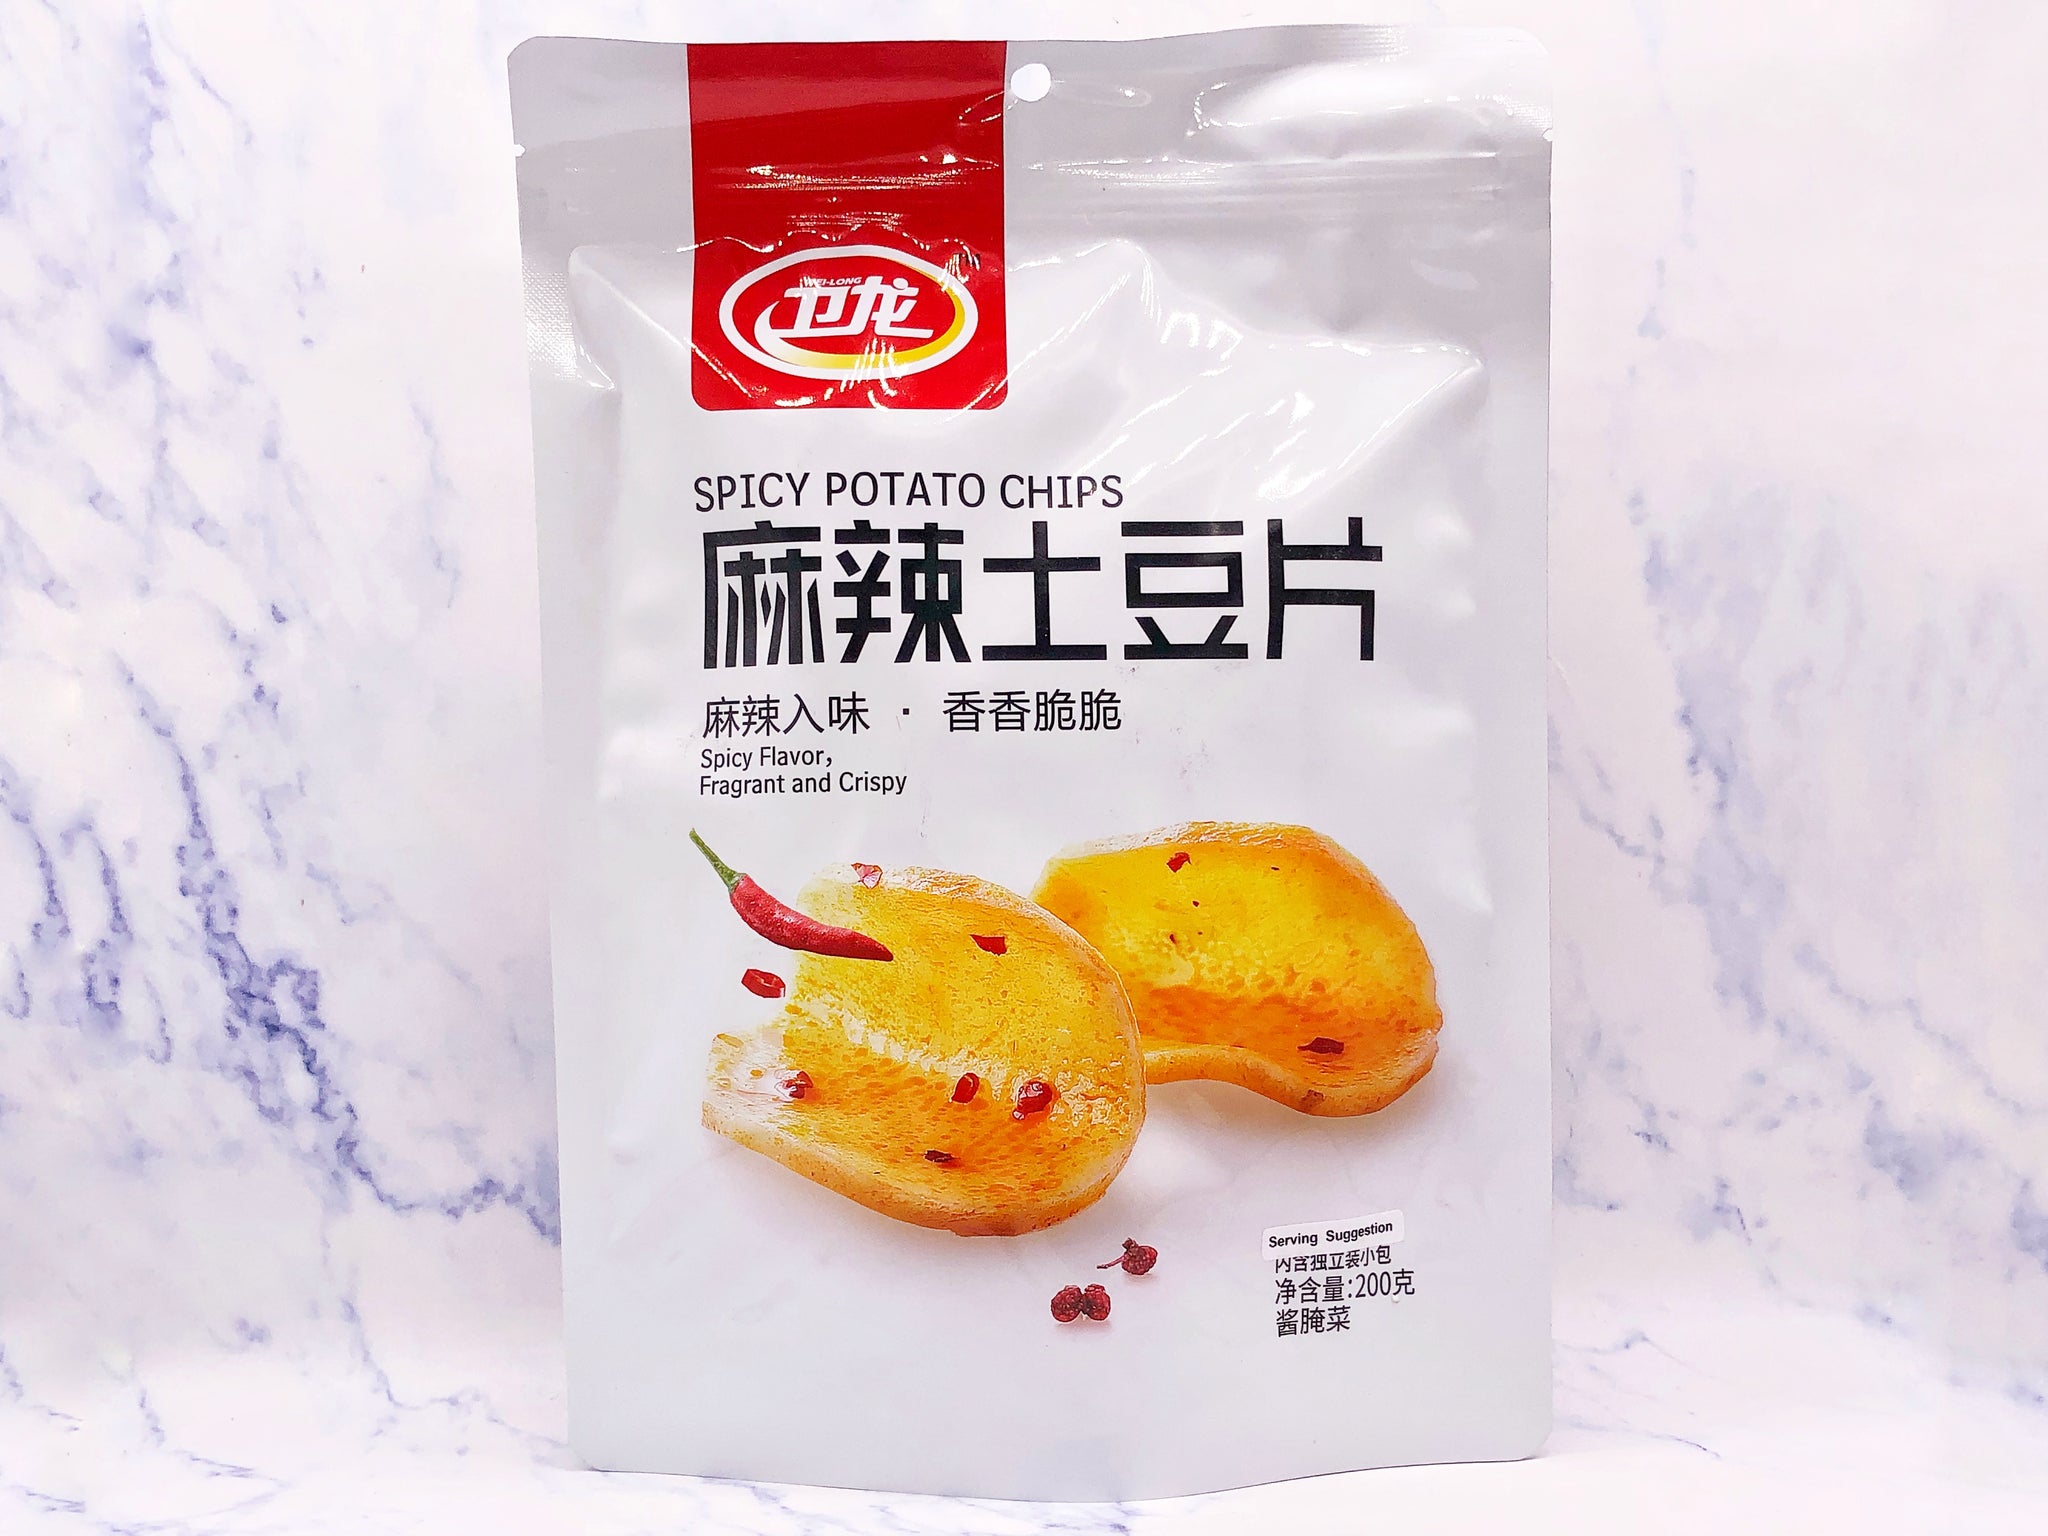 （15%OFF！BBD: 09.09.2022）卫龙麻辣土豆片 WL Spicy Potato Chips